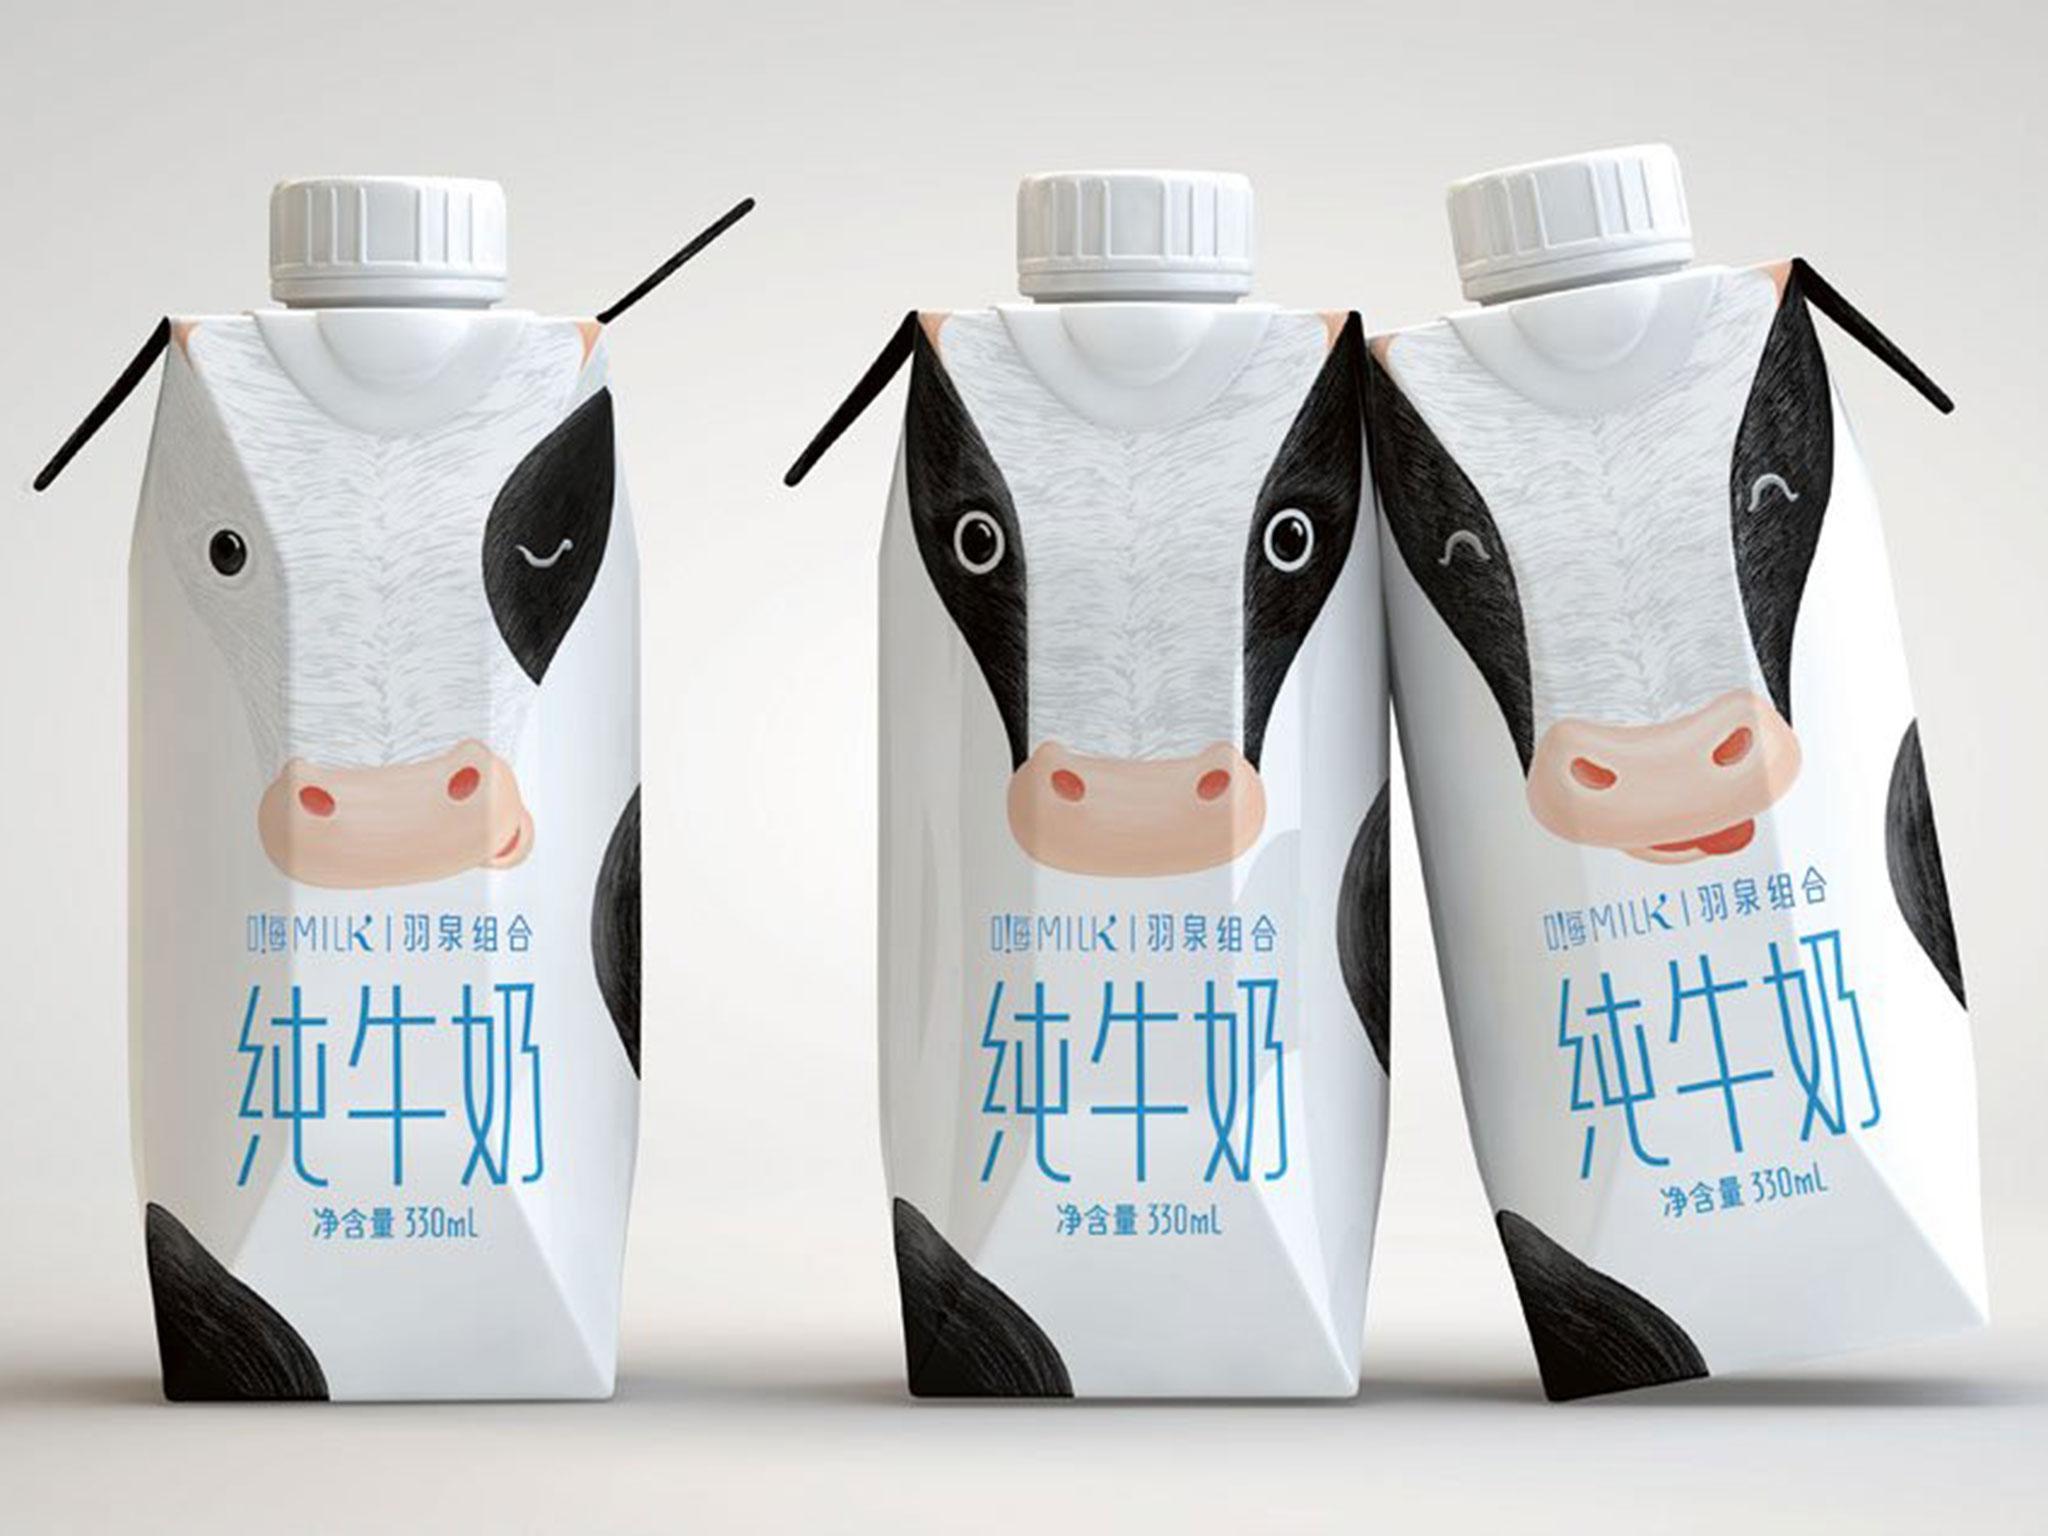 Mengniu Hi!Milk by L3 Branding Experience in China. Gold Pentawards winner